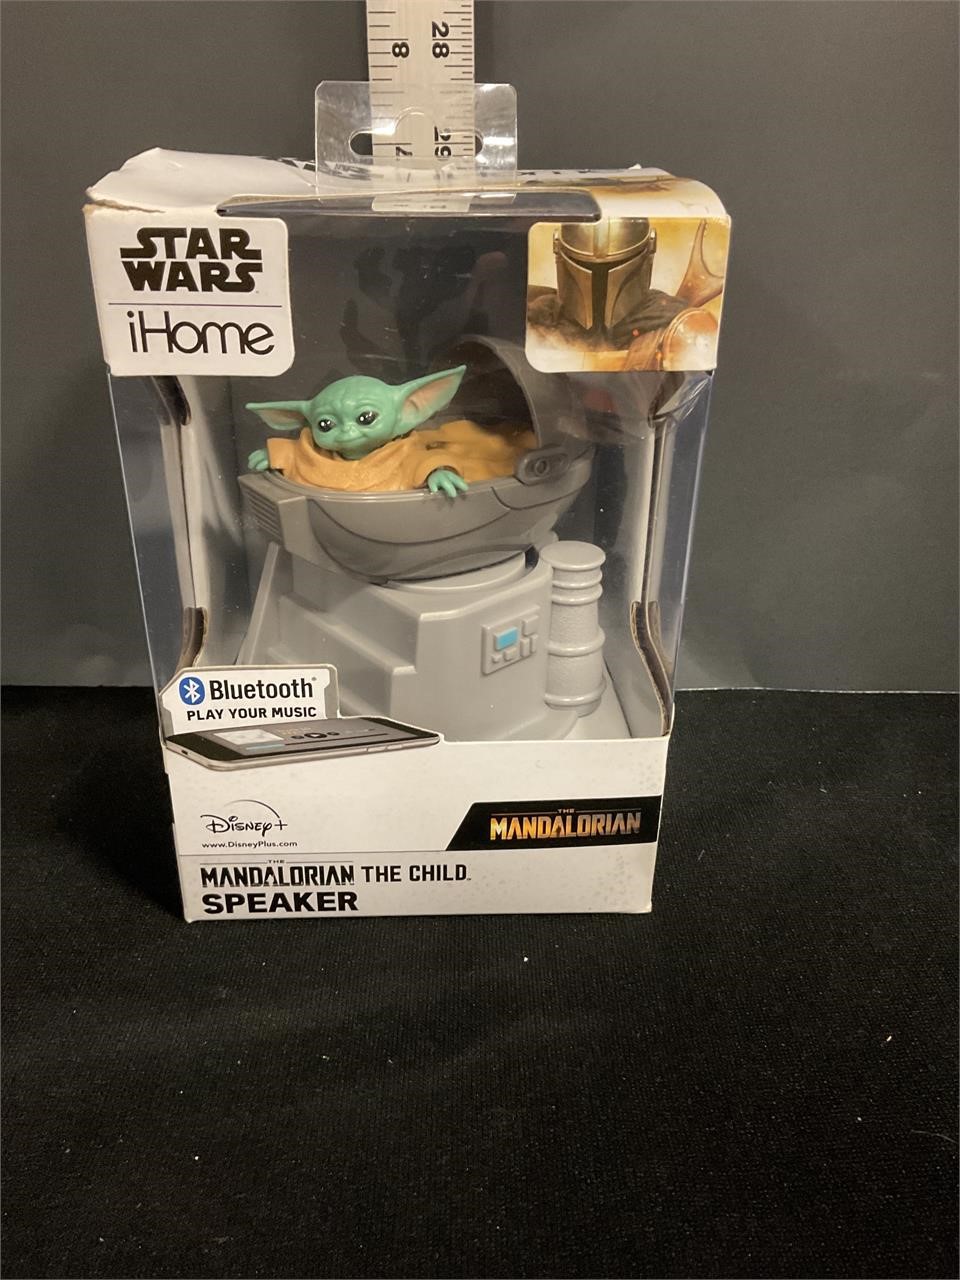 Star Wars blue tooth speaker